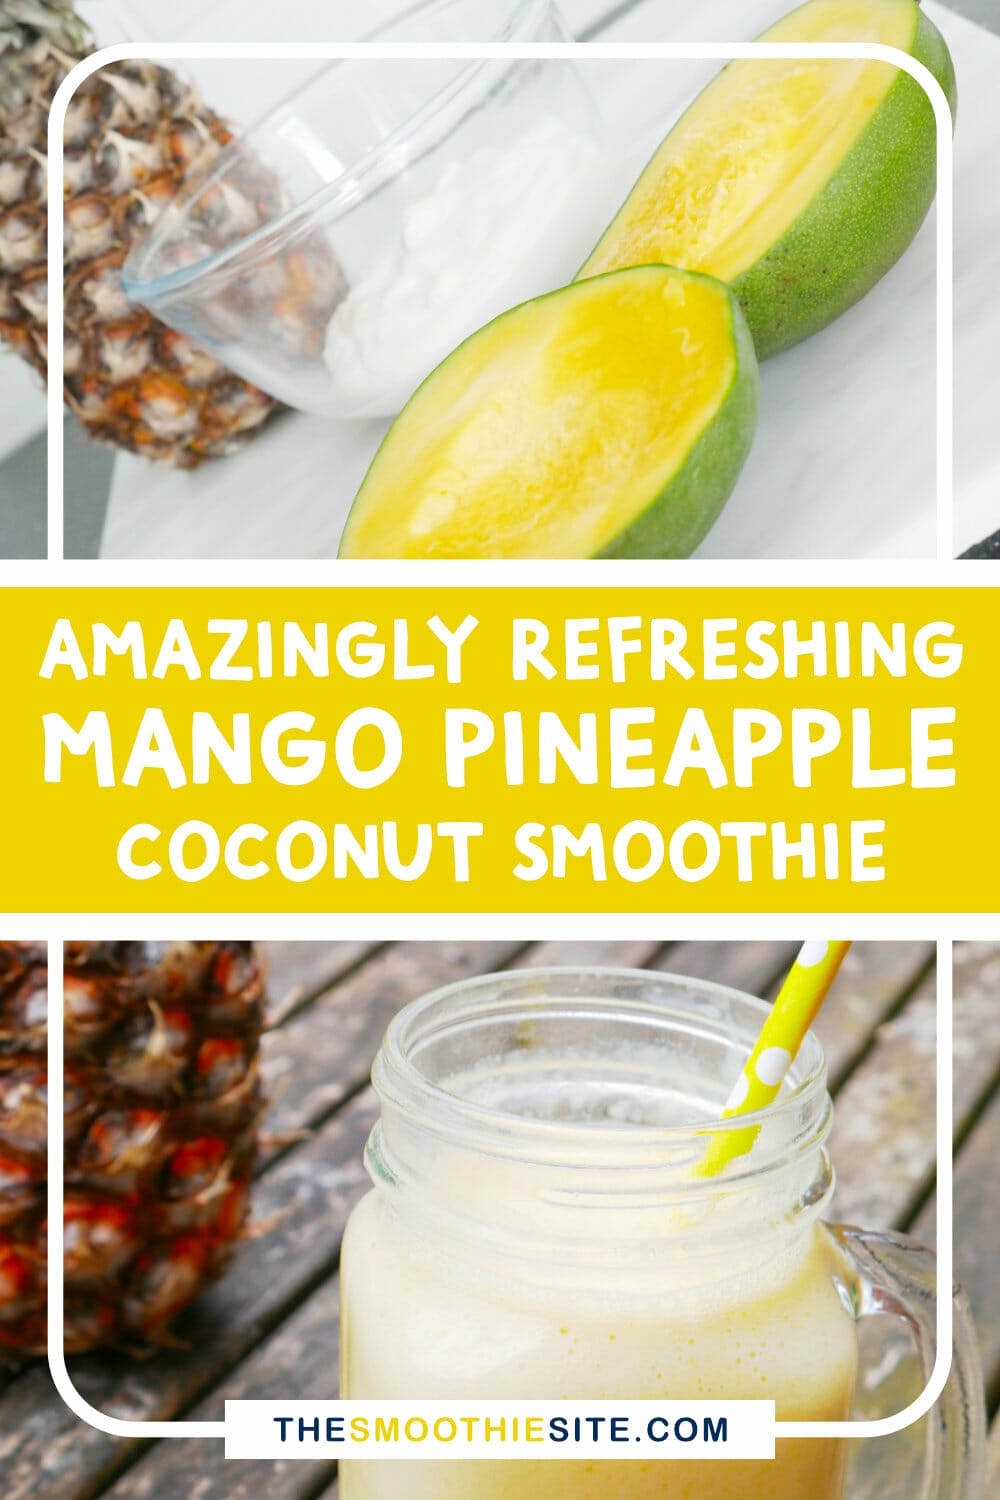 Refreshing mango pineapple coconut smoothie (+ tips!) via @thesmoothiesite